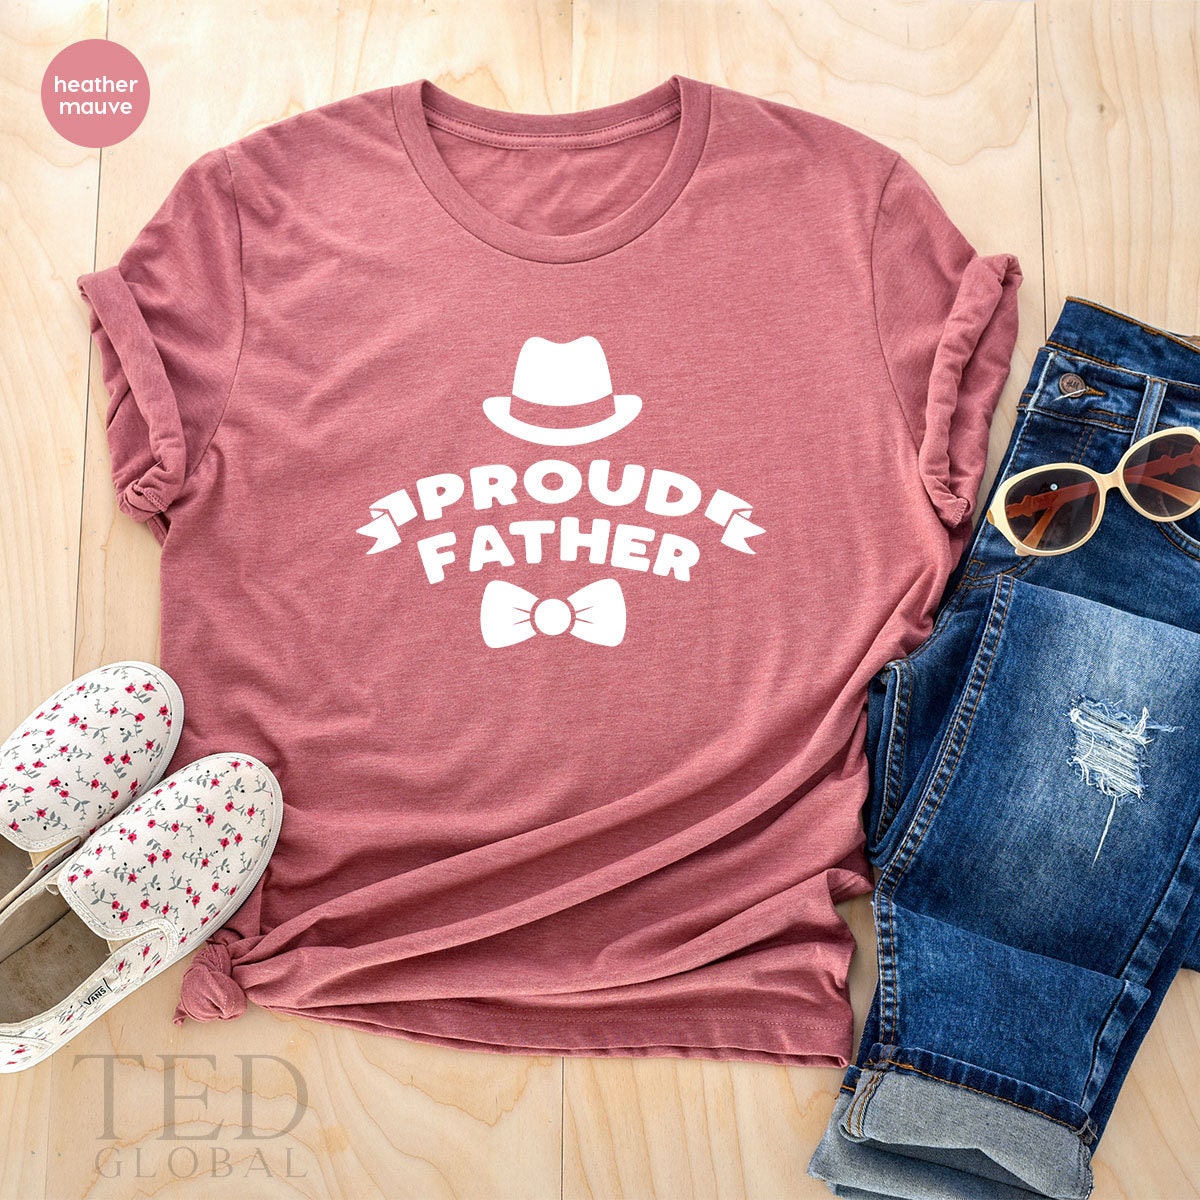 Superhero Dad Shirt, Fathers Day Shirt, Proud Father Shirt, Cool Dad TShirt, Gift For Father, Super Father T Shirt, New Father Tee - Fastdeliverytees.com